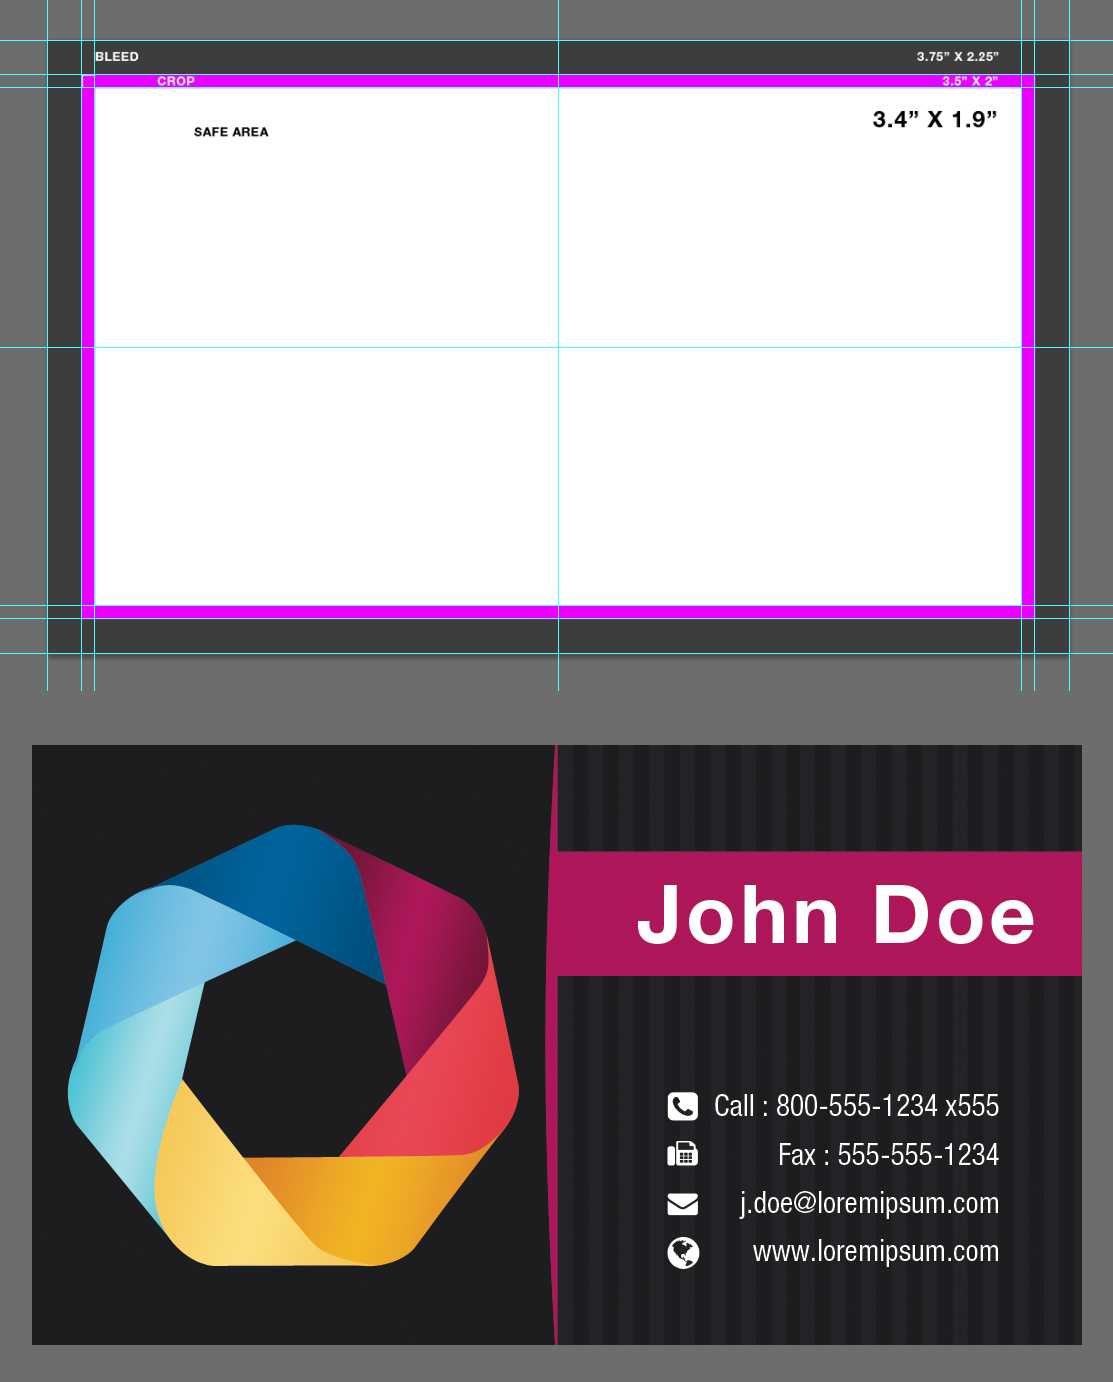 Blank Business Card Template Psdxxdigipxx On Deviantart Inside Blank Business Card Template Photoshop